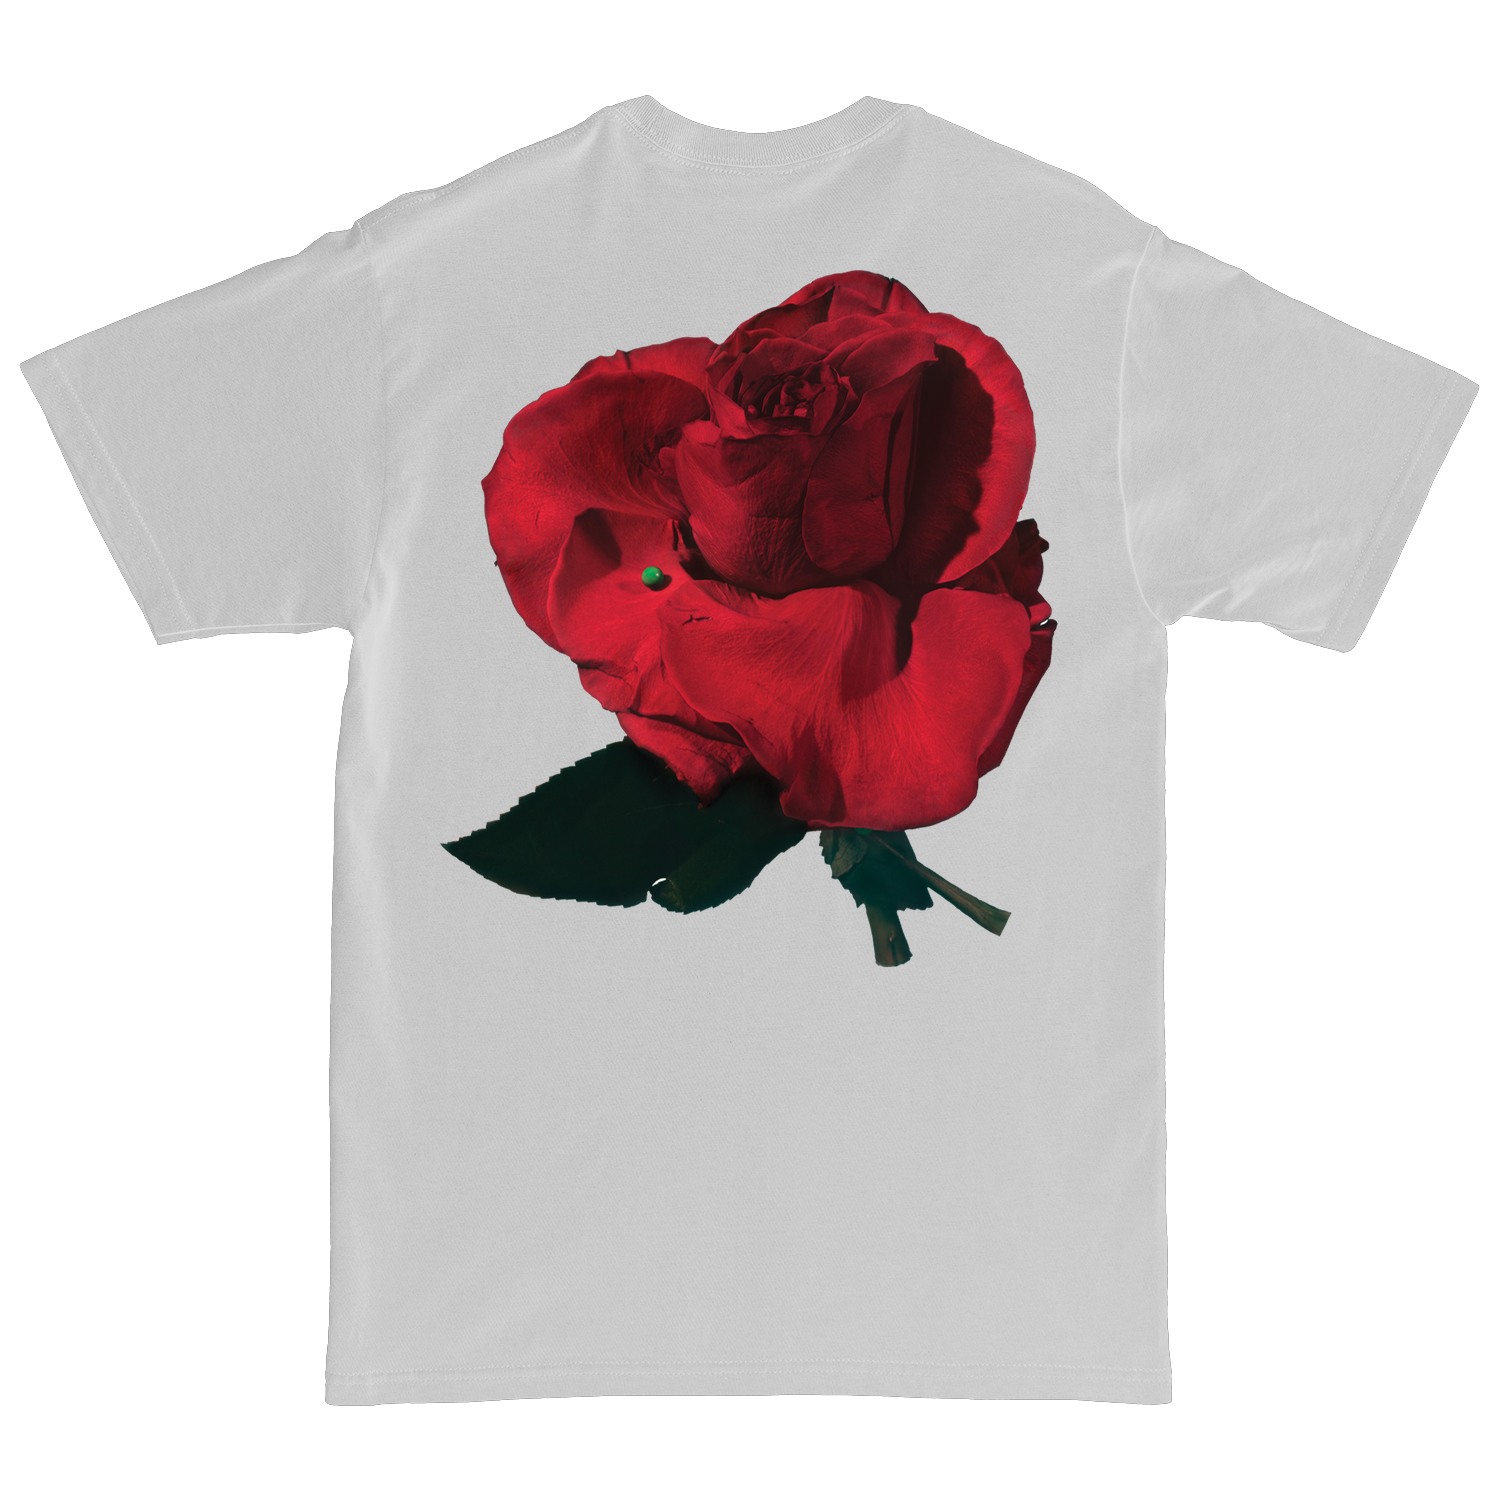 METZ "Isolated Rose" White T-Shirt